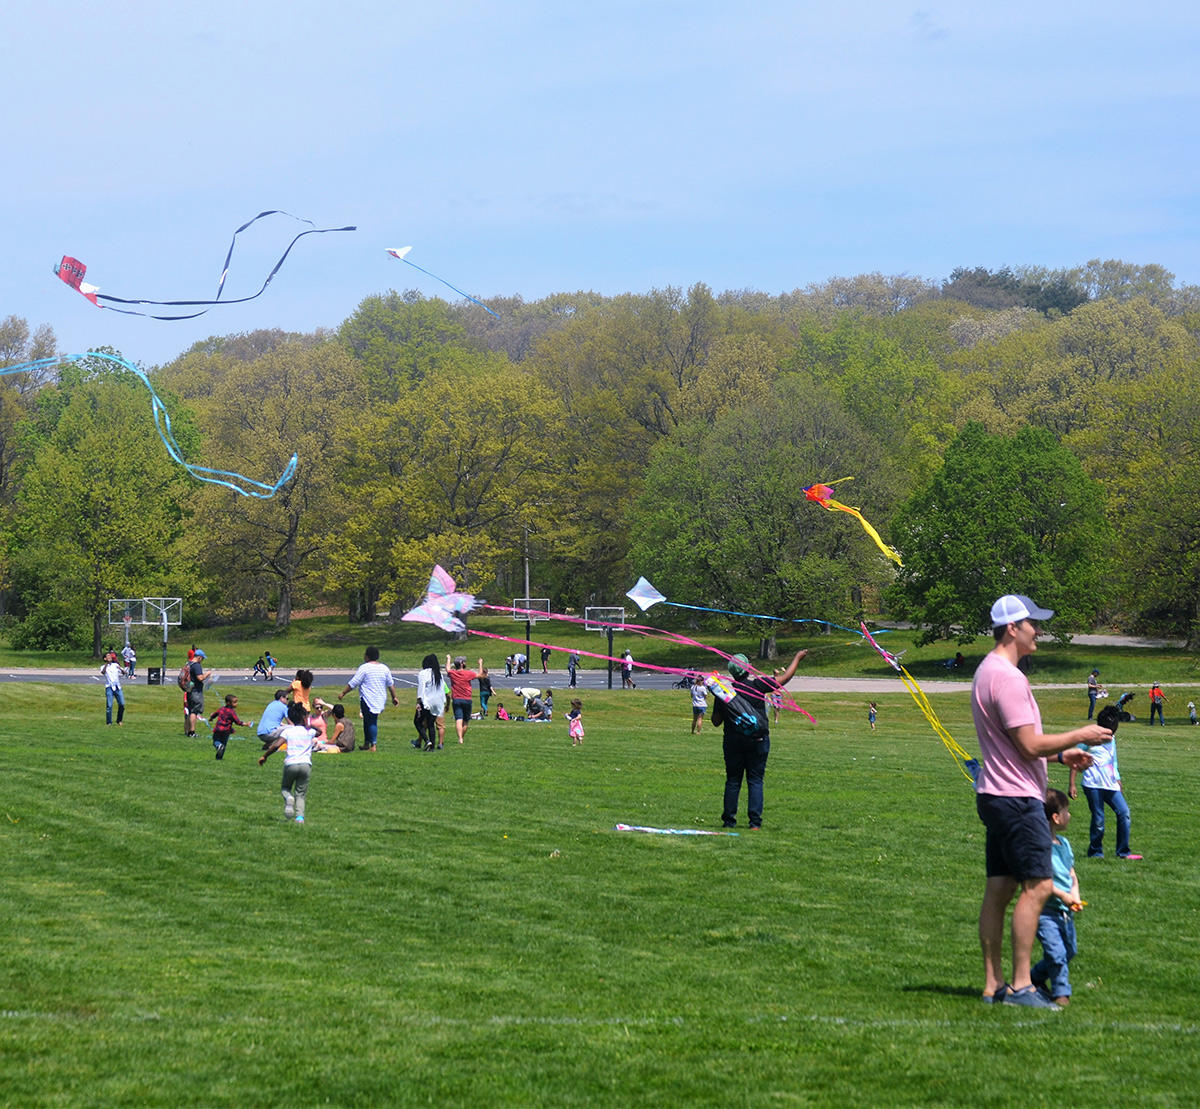 Image for 5 19 18 franklin park kite and bike festival1